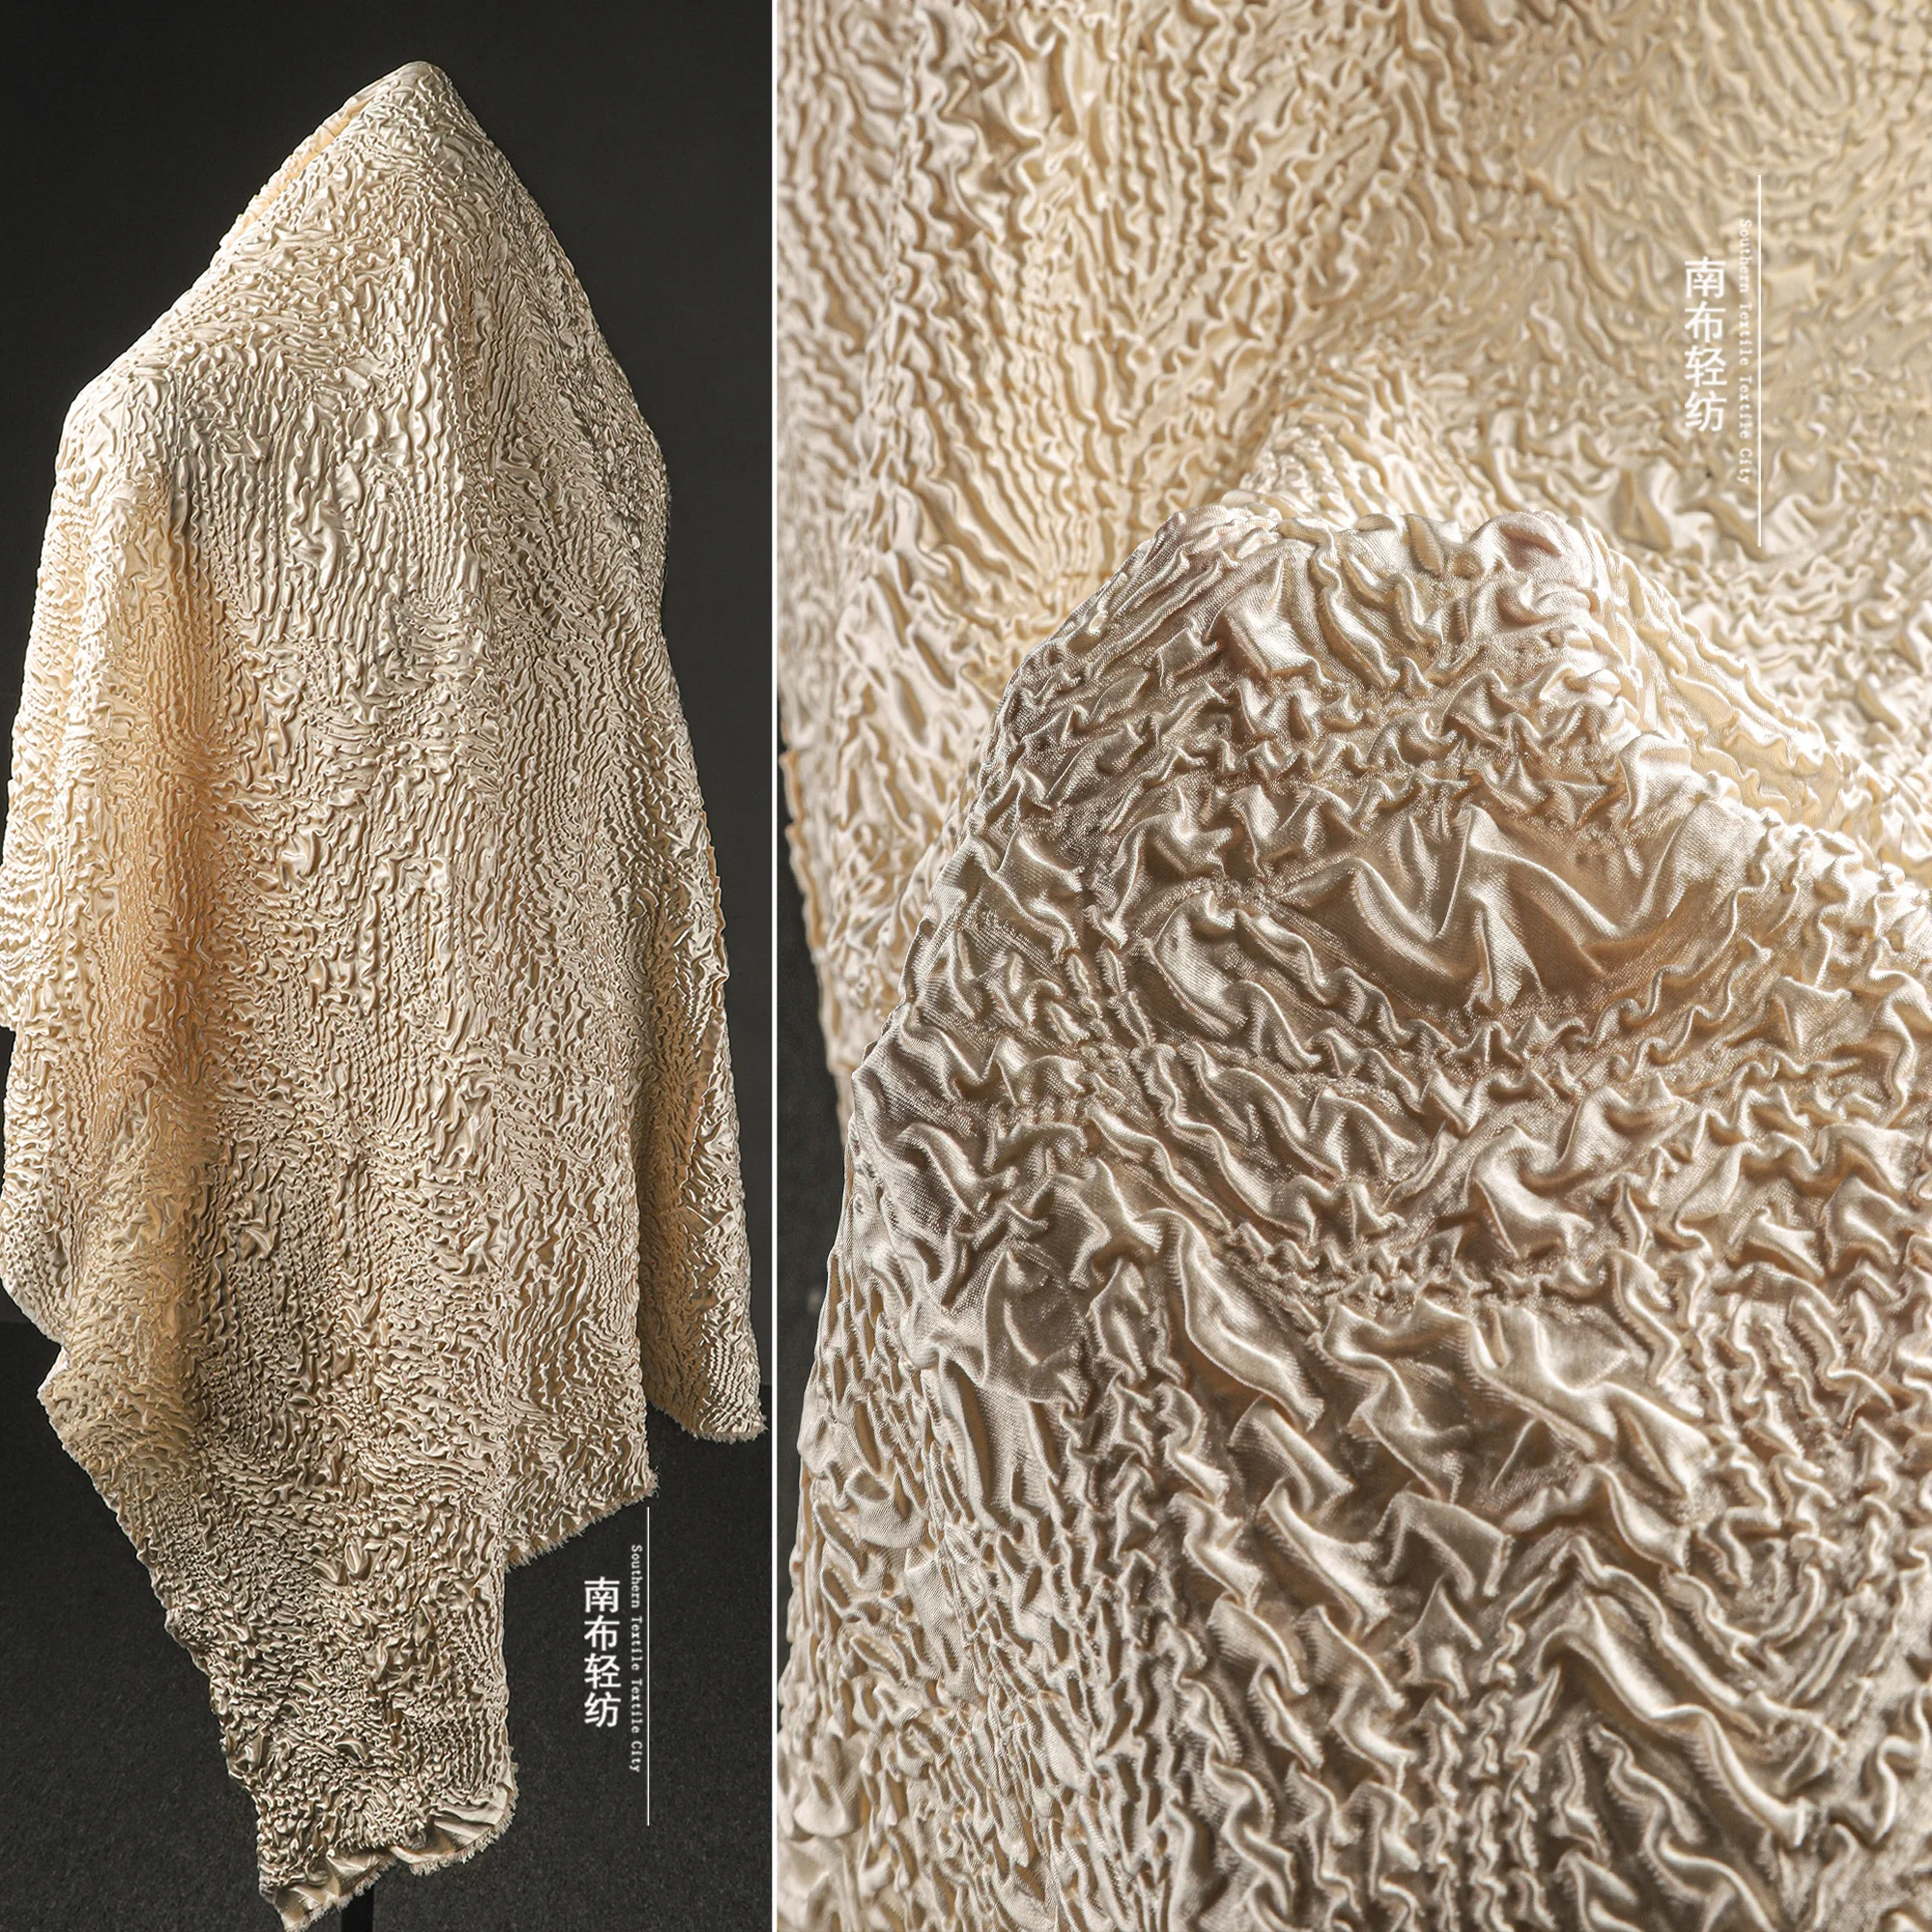 

Camel Pleated Concave-Convex Texture Cloth Three-Dimensional Embossed Corrugated Creative Handmade DIY Clothing Designer Fabric